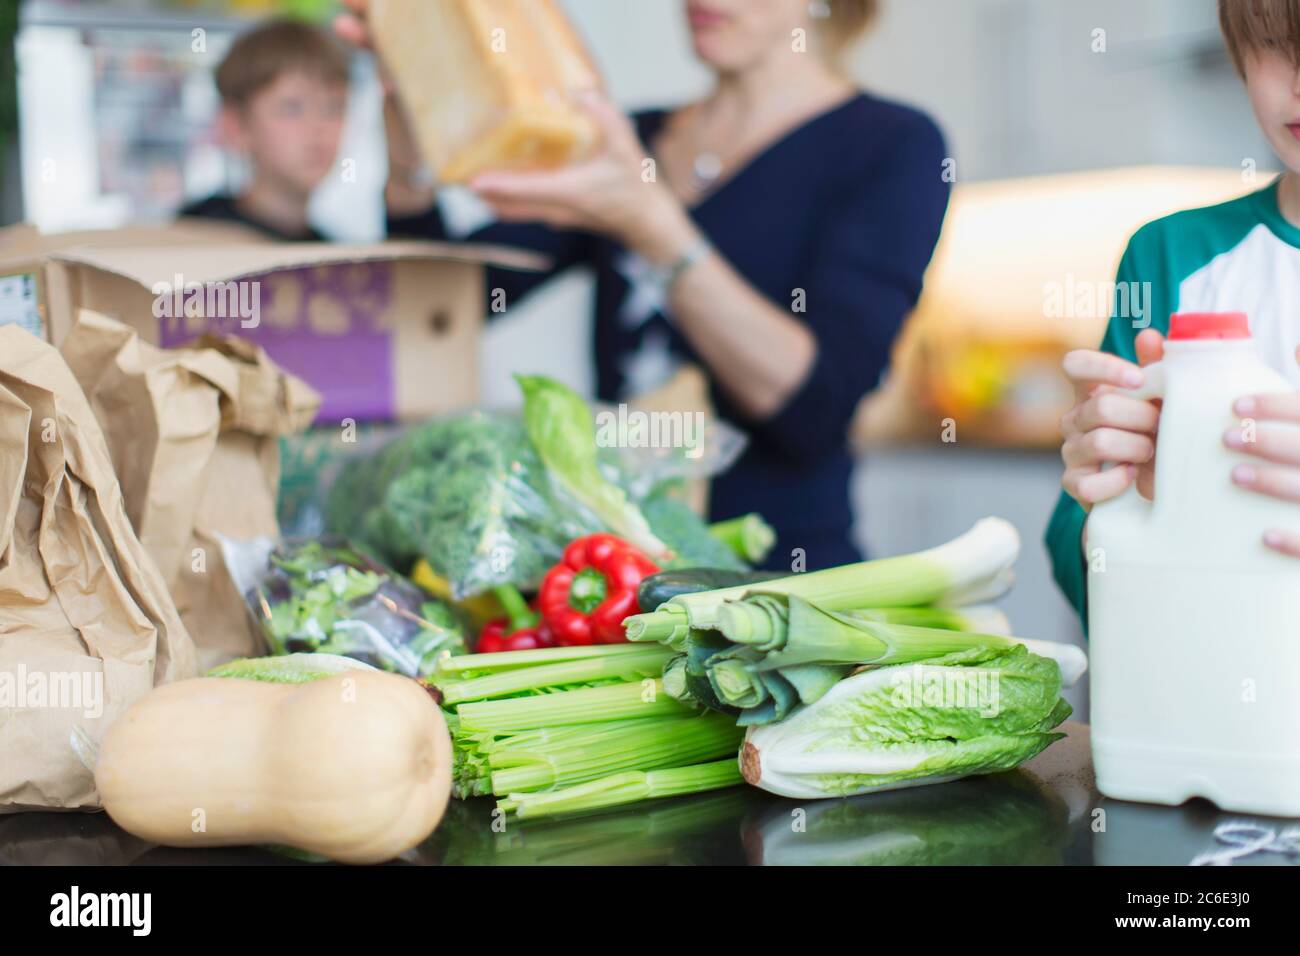 Family unloading fresh produce in kitchen Stock Photo